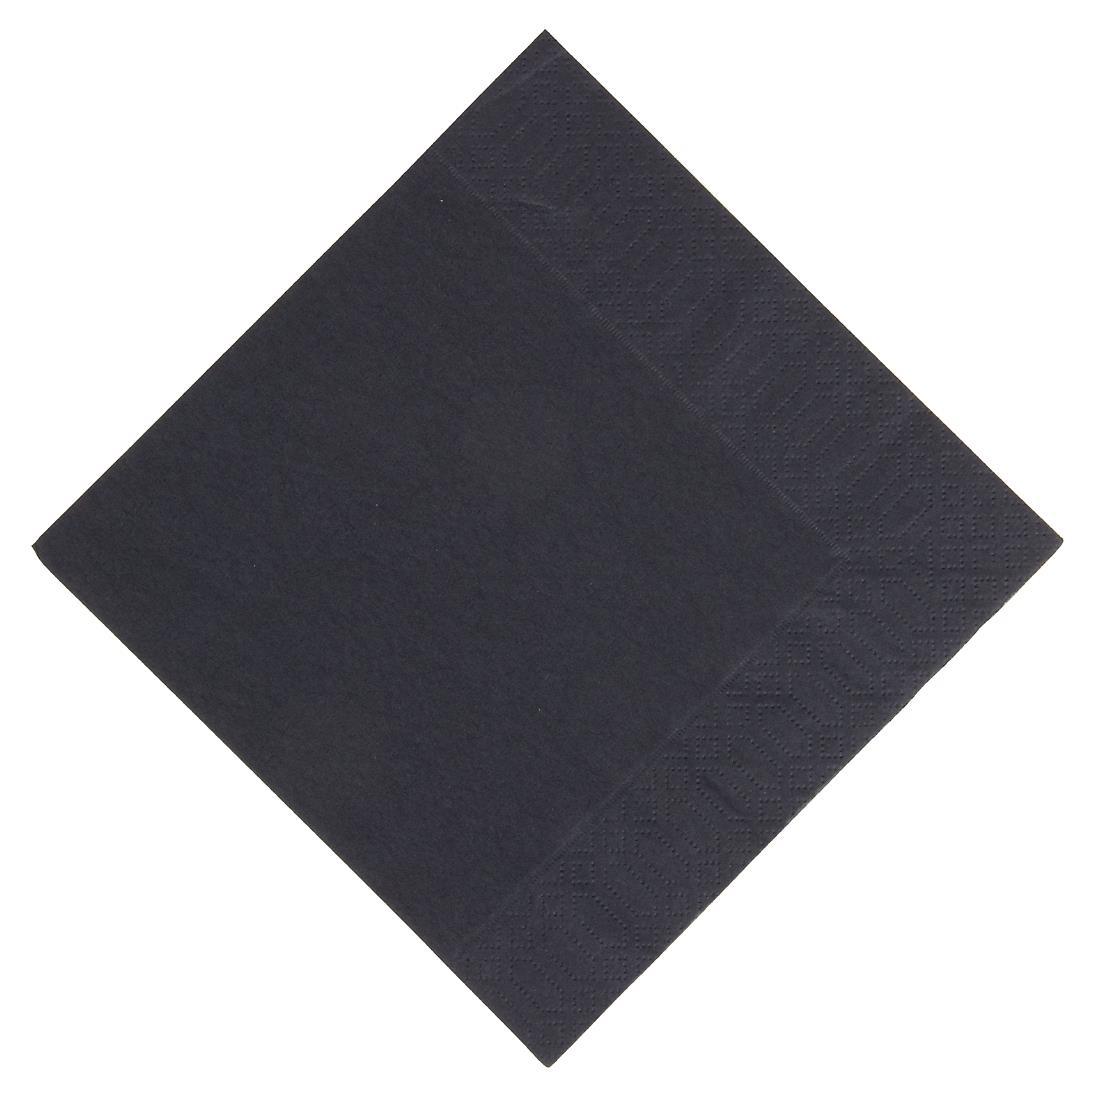 Duni Lunch Napkin Black 33x33cm 3ply 1/4 Fold (Pack of 1000) - GJ107  - 1